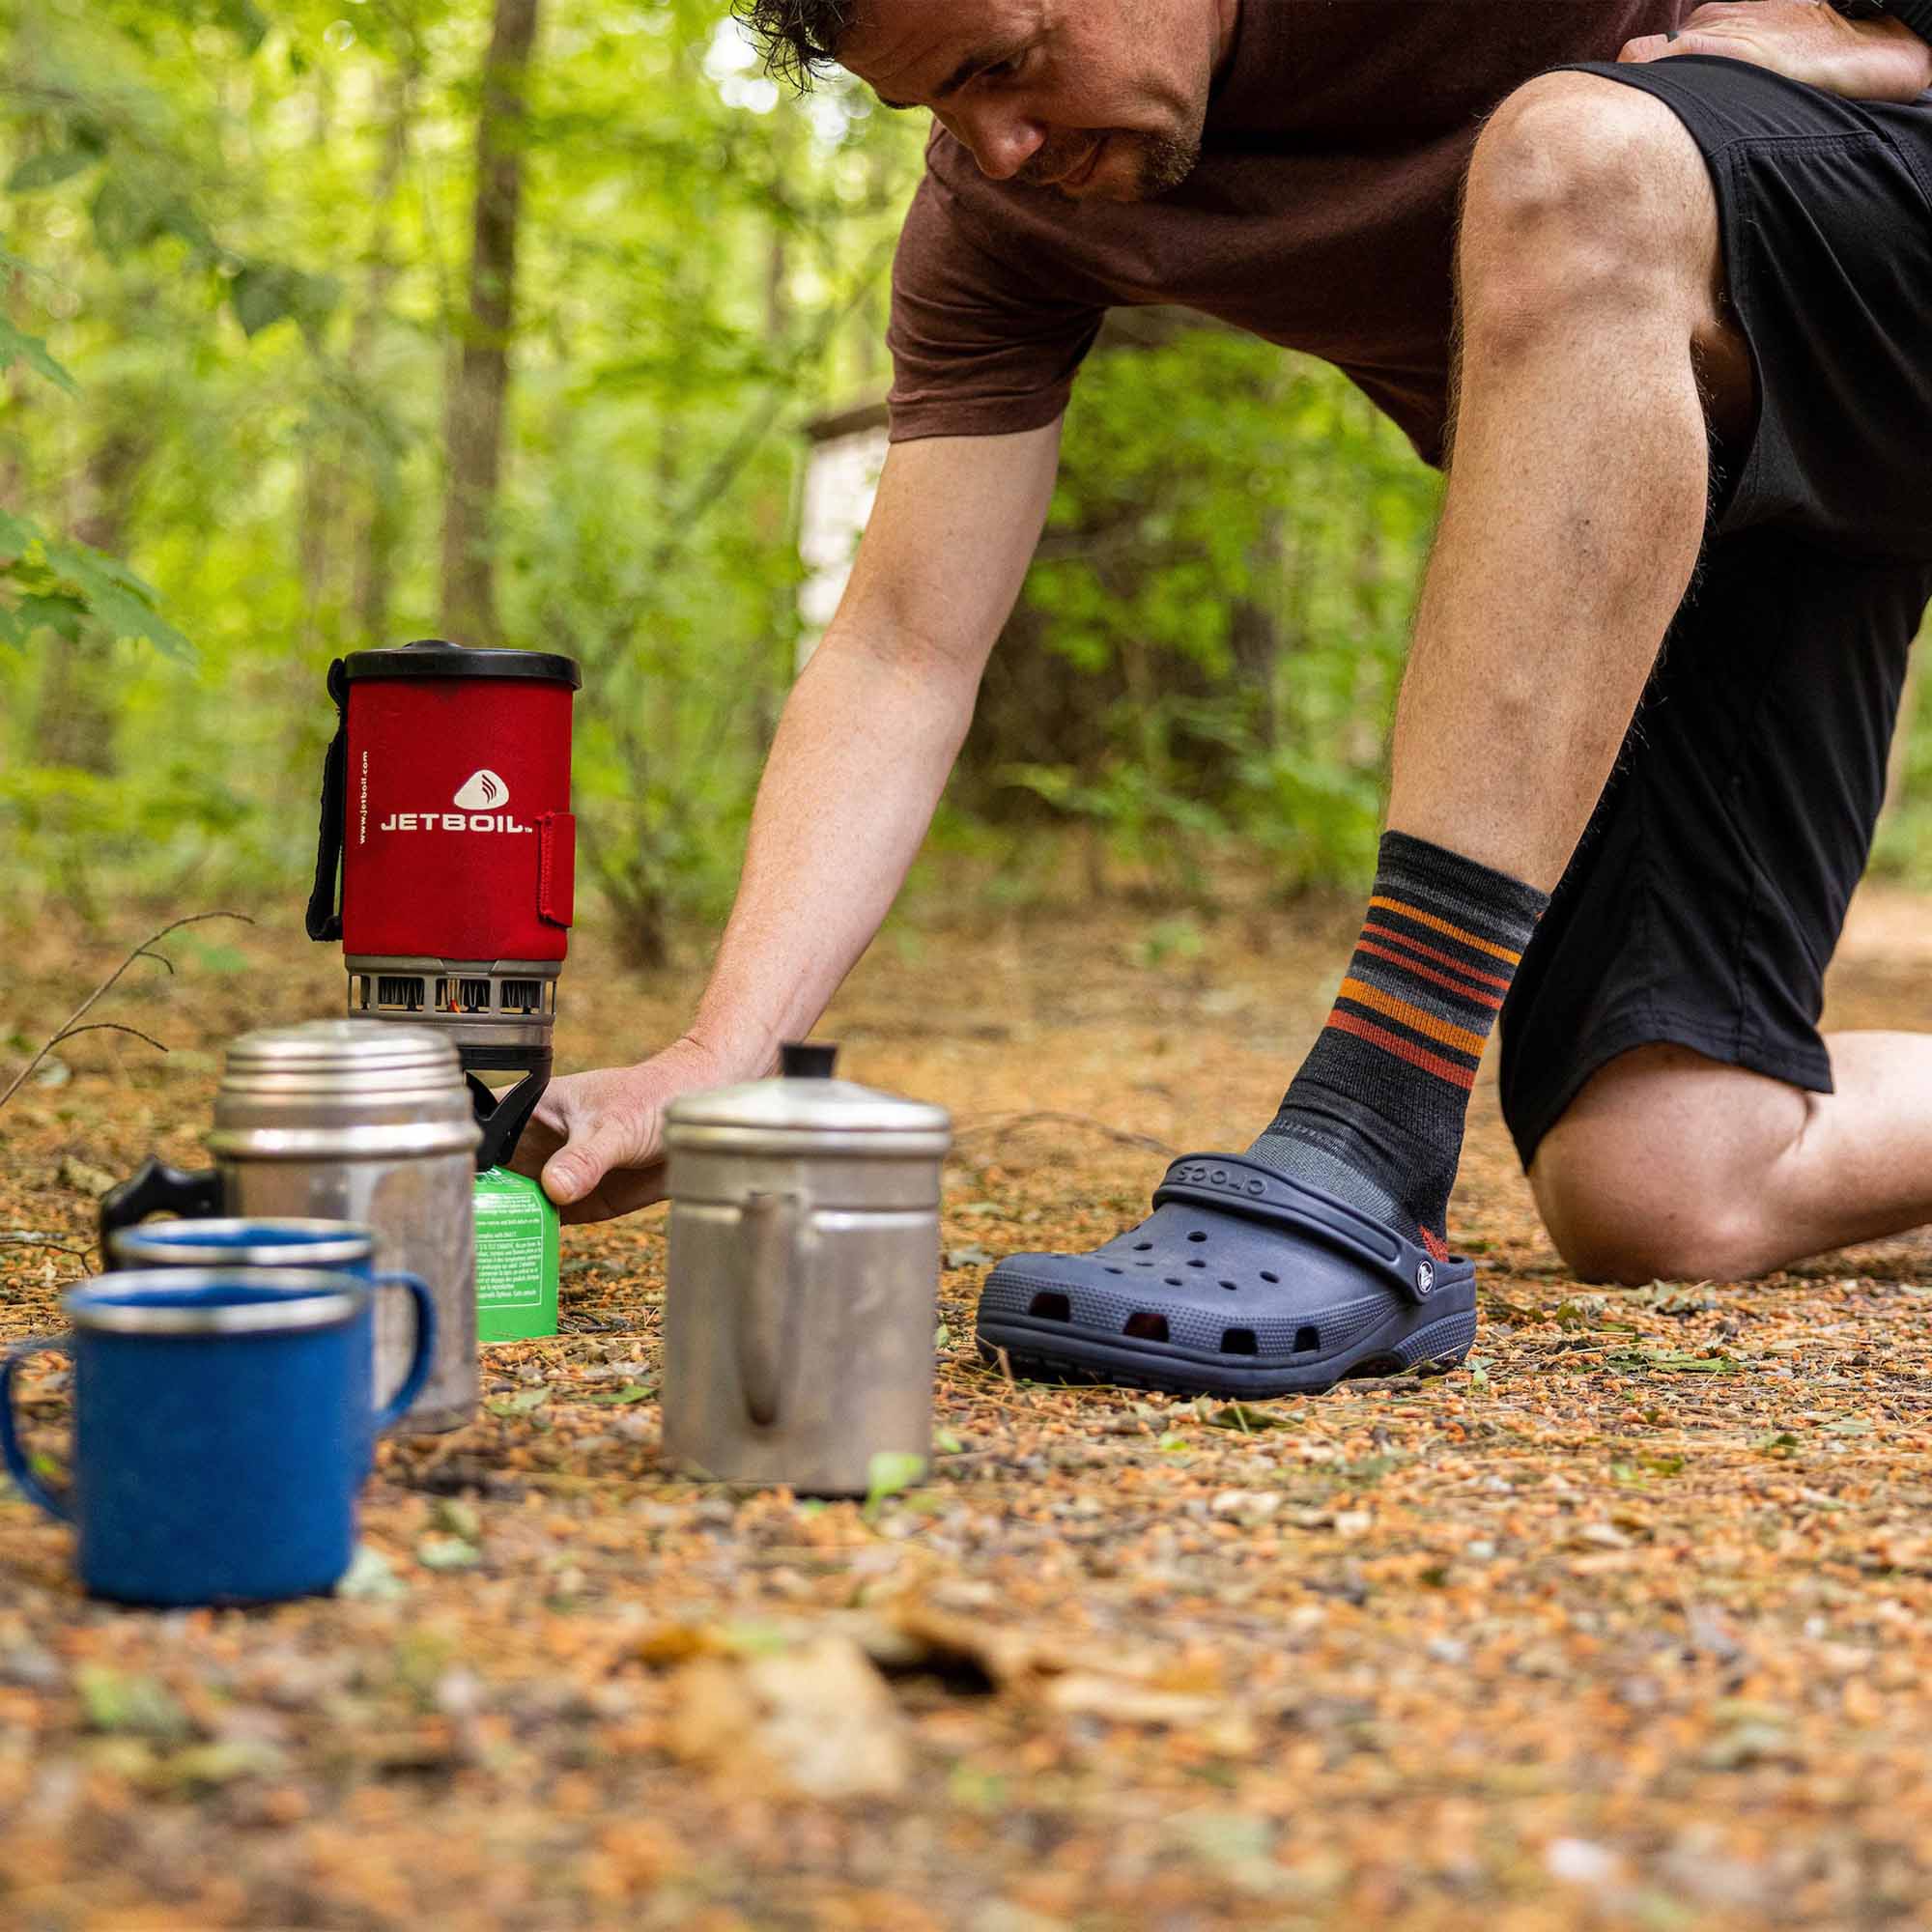 Darn Tough Fastpack Micro Crew Lightweight Hiking Socks